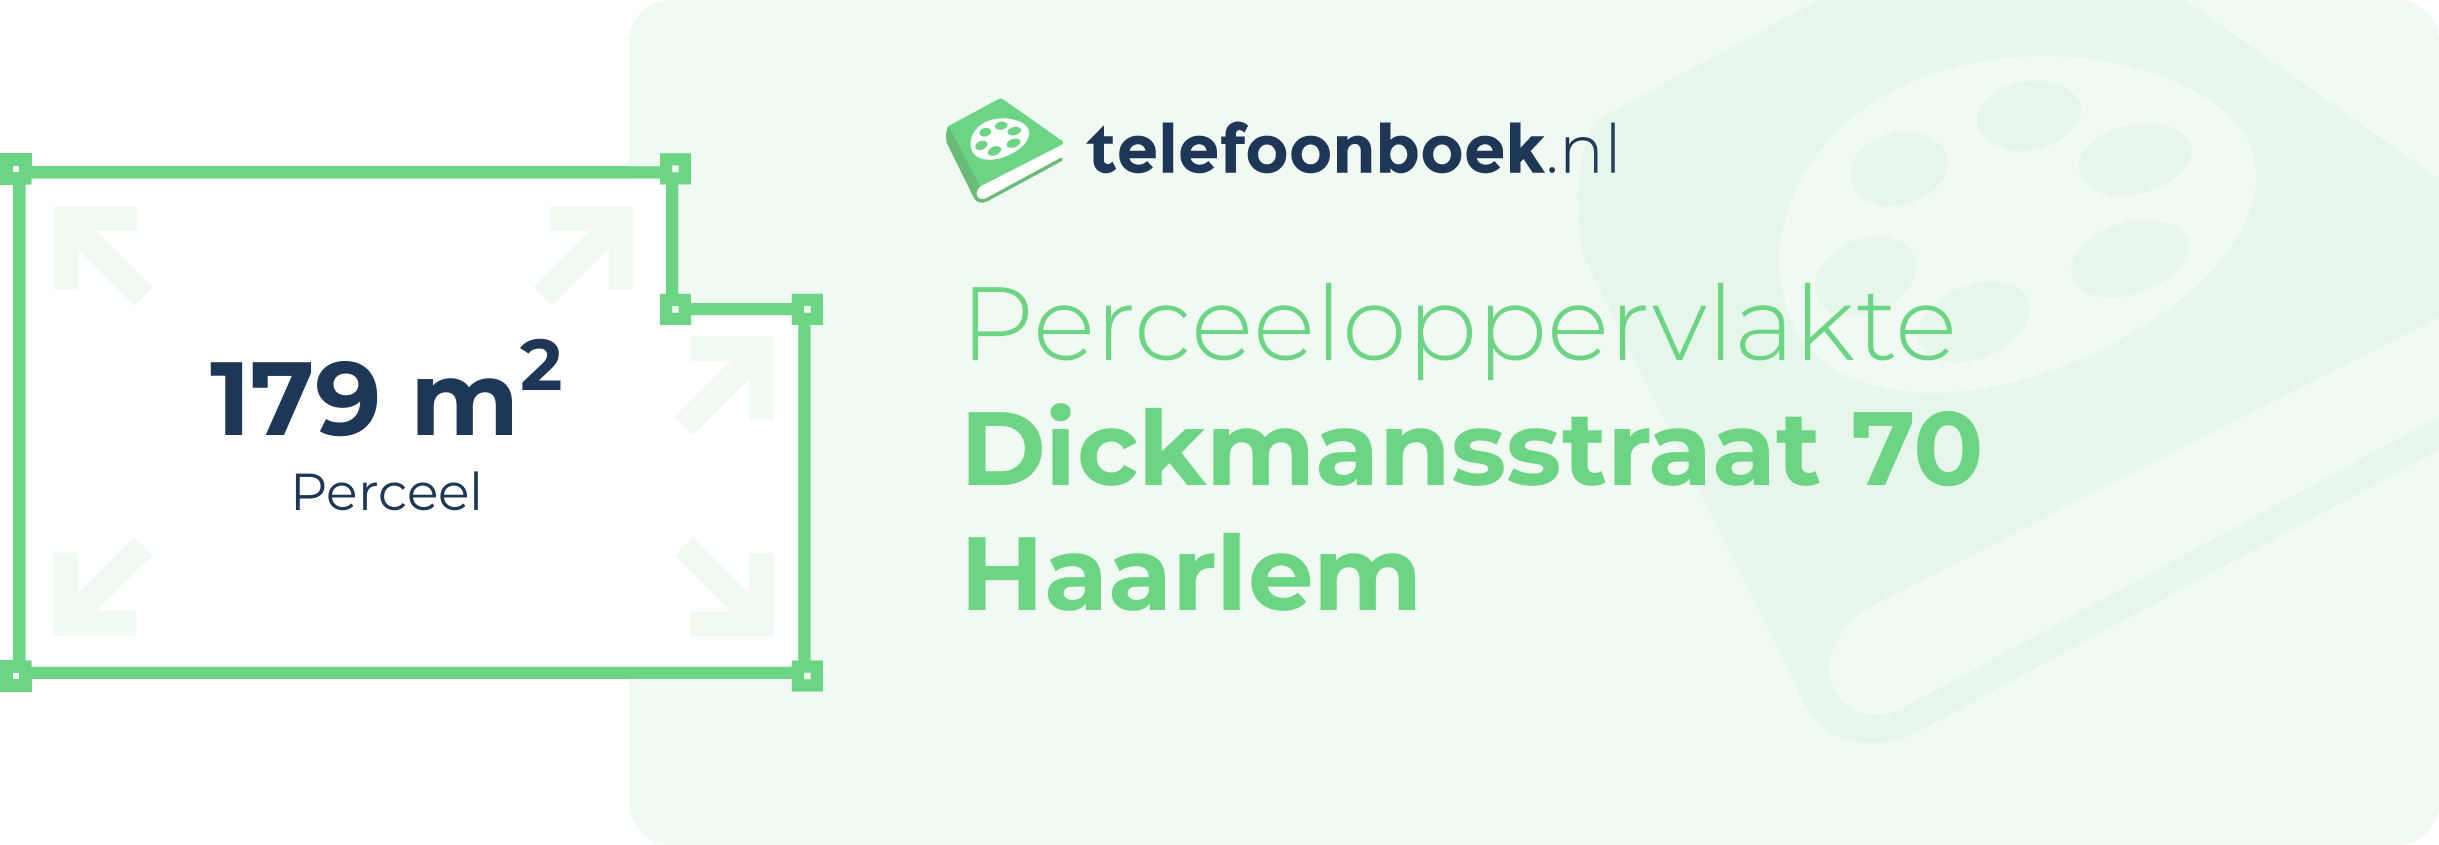 Perceeloppervlakte Dickmansstraat 70 Haarlem